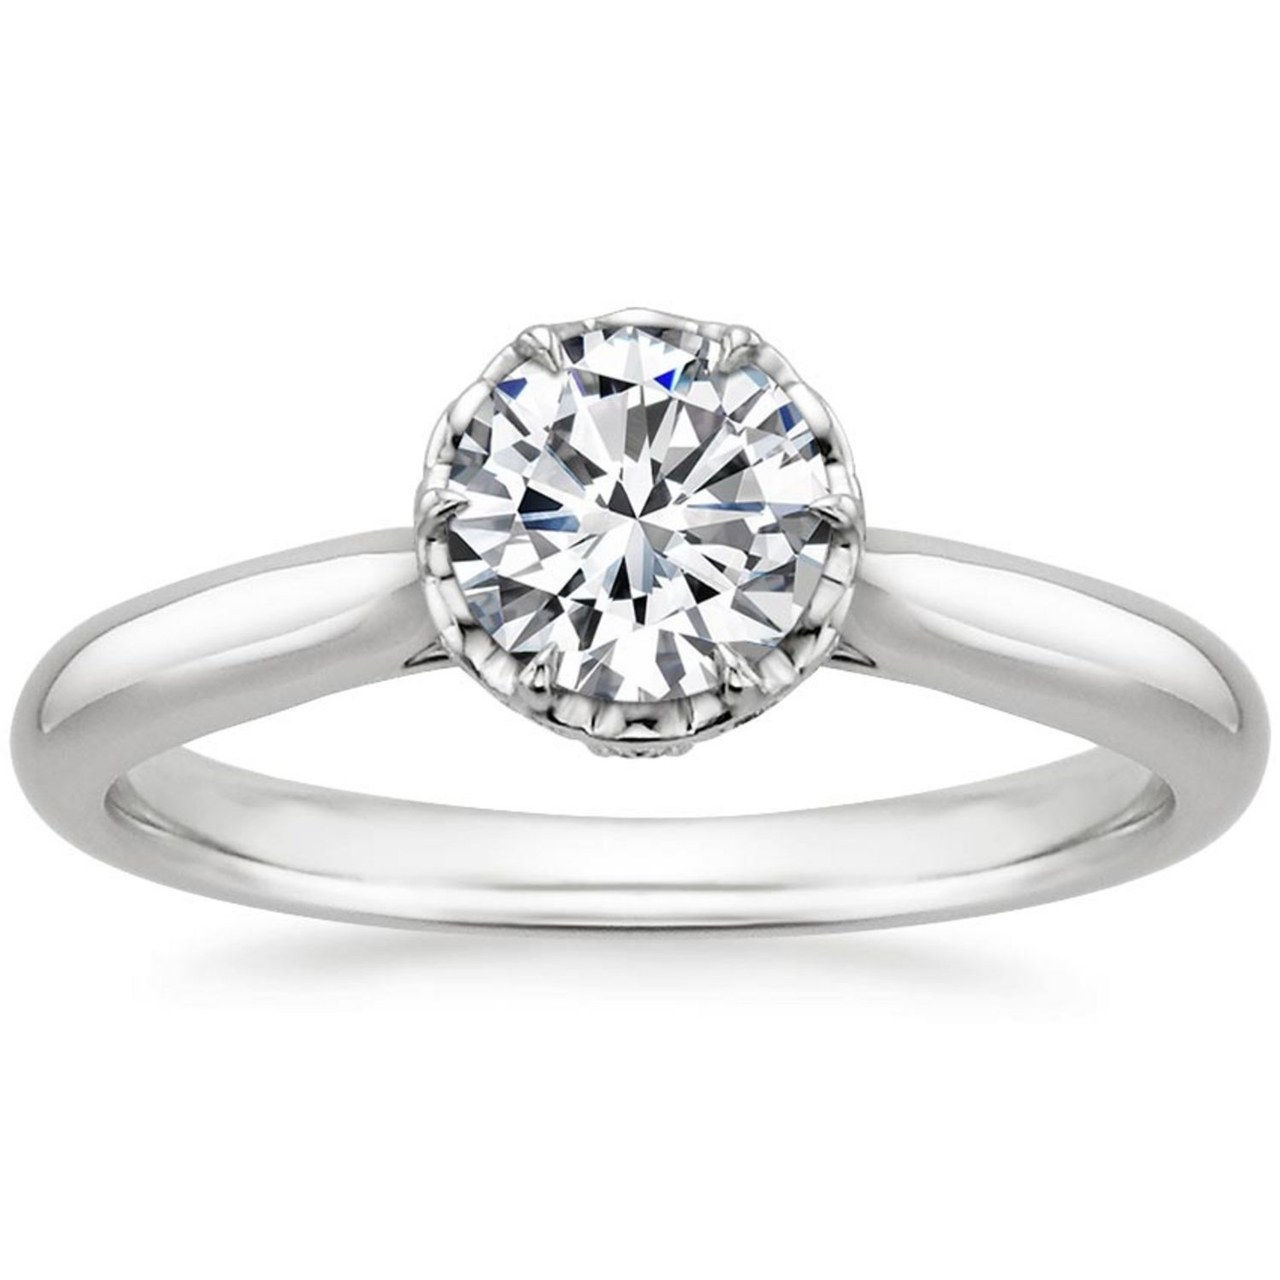 5 diamond engagement rings 0811